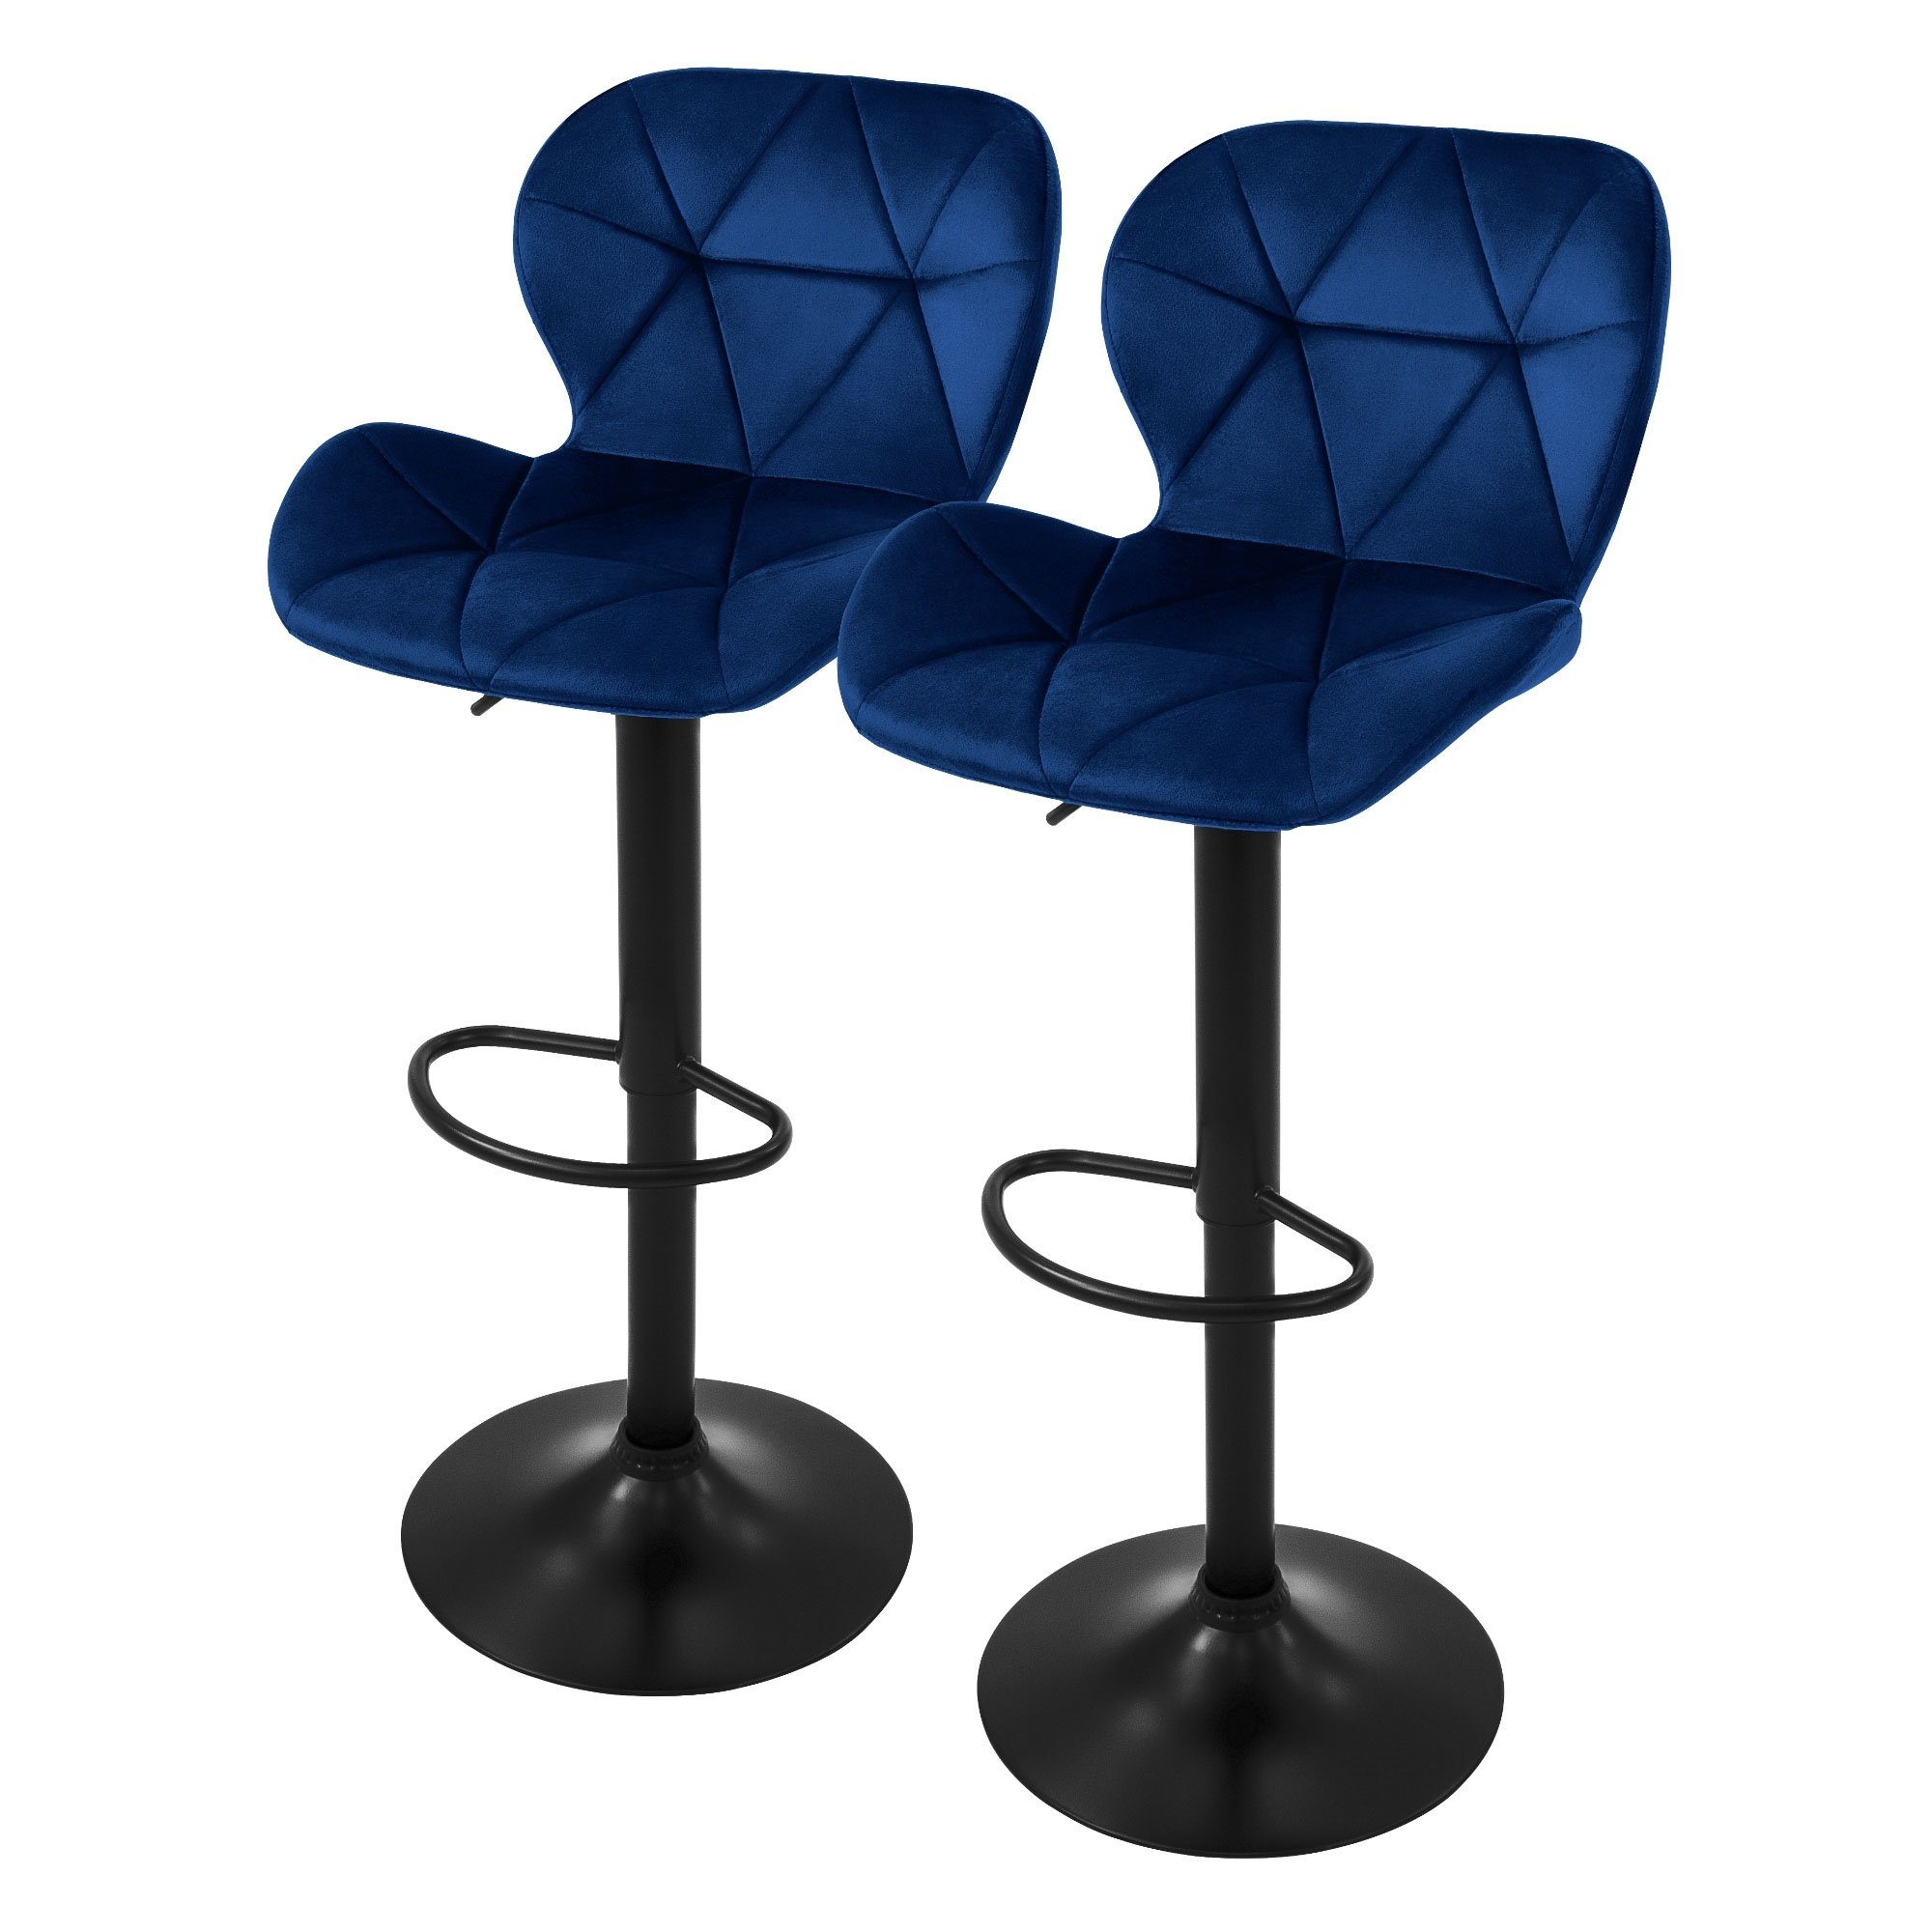 Barstühle, Bistrohocker Drehstuhl Blau Samt drehbar Set mit 2er Barstuhl höhenverstellbar Fußstütze Hocker ML-DESIGN Gepolstert Tresenhocker Barhocker